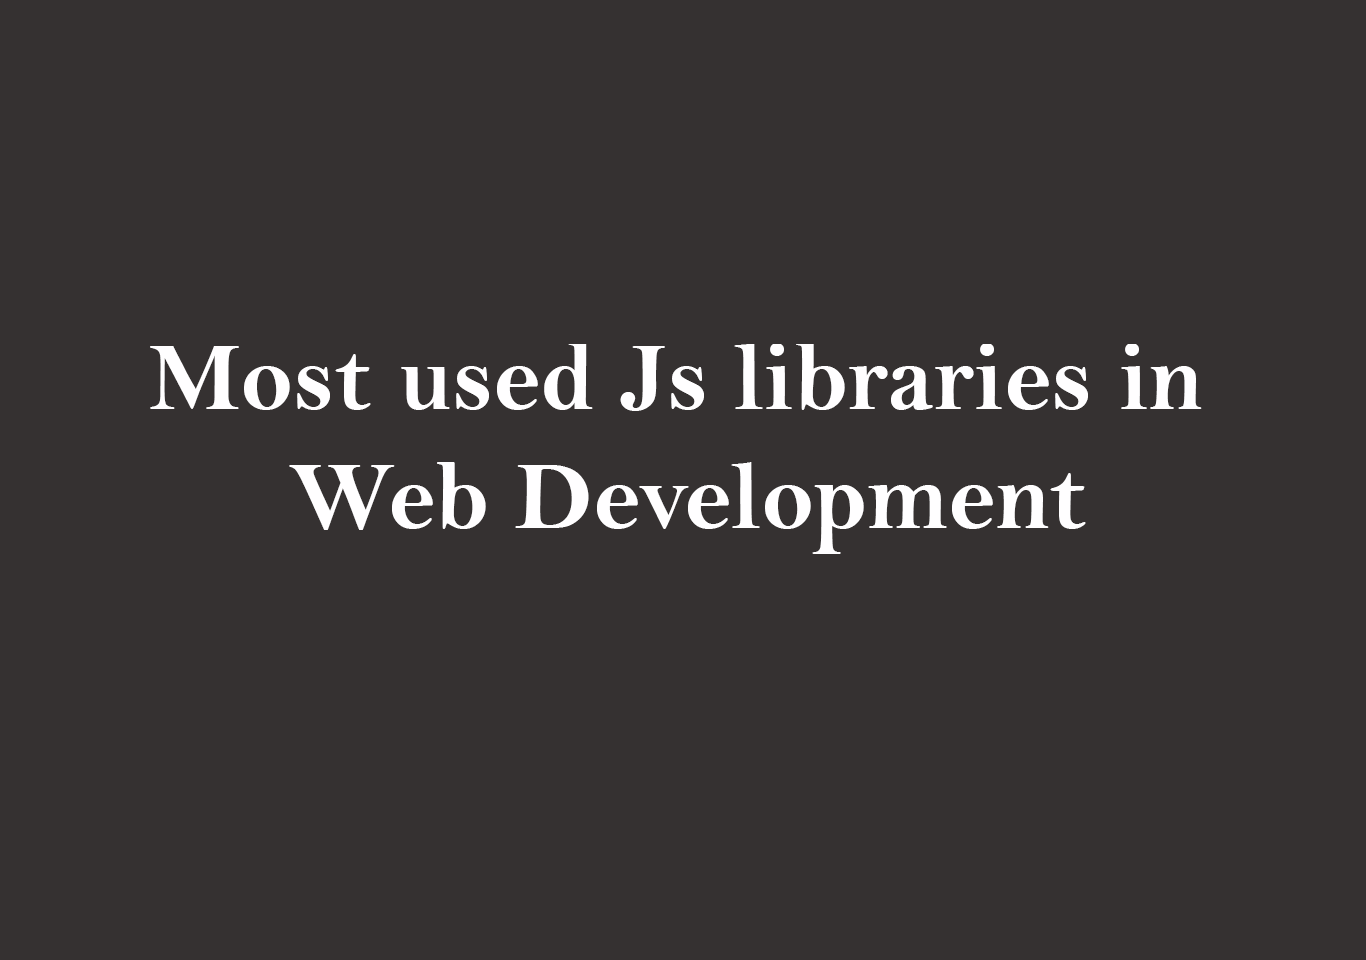 JavaScript libraries